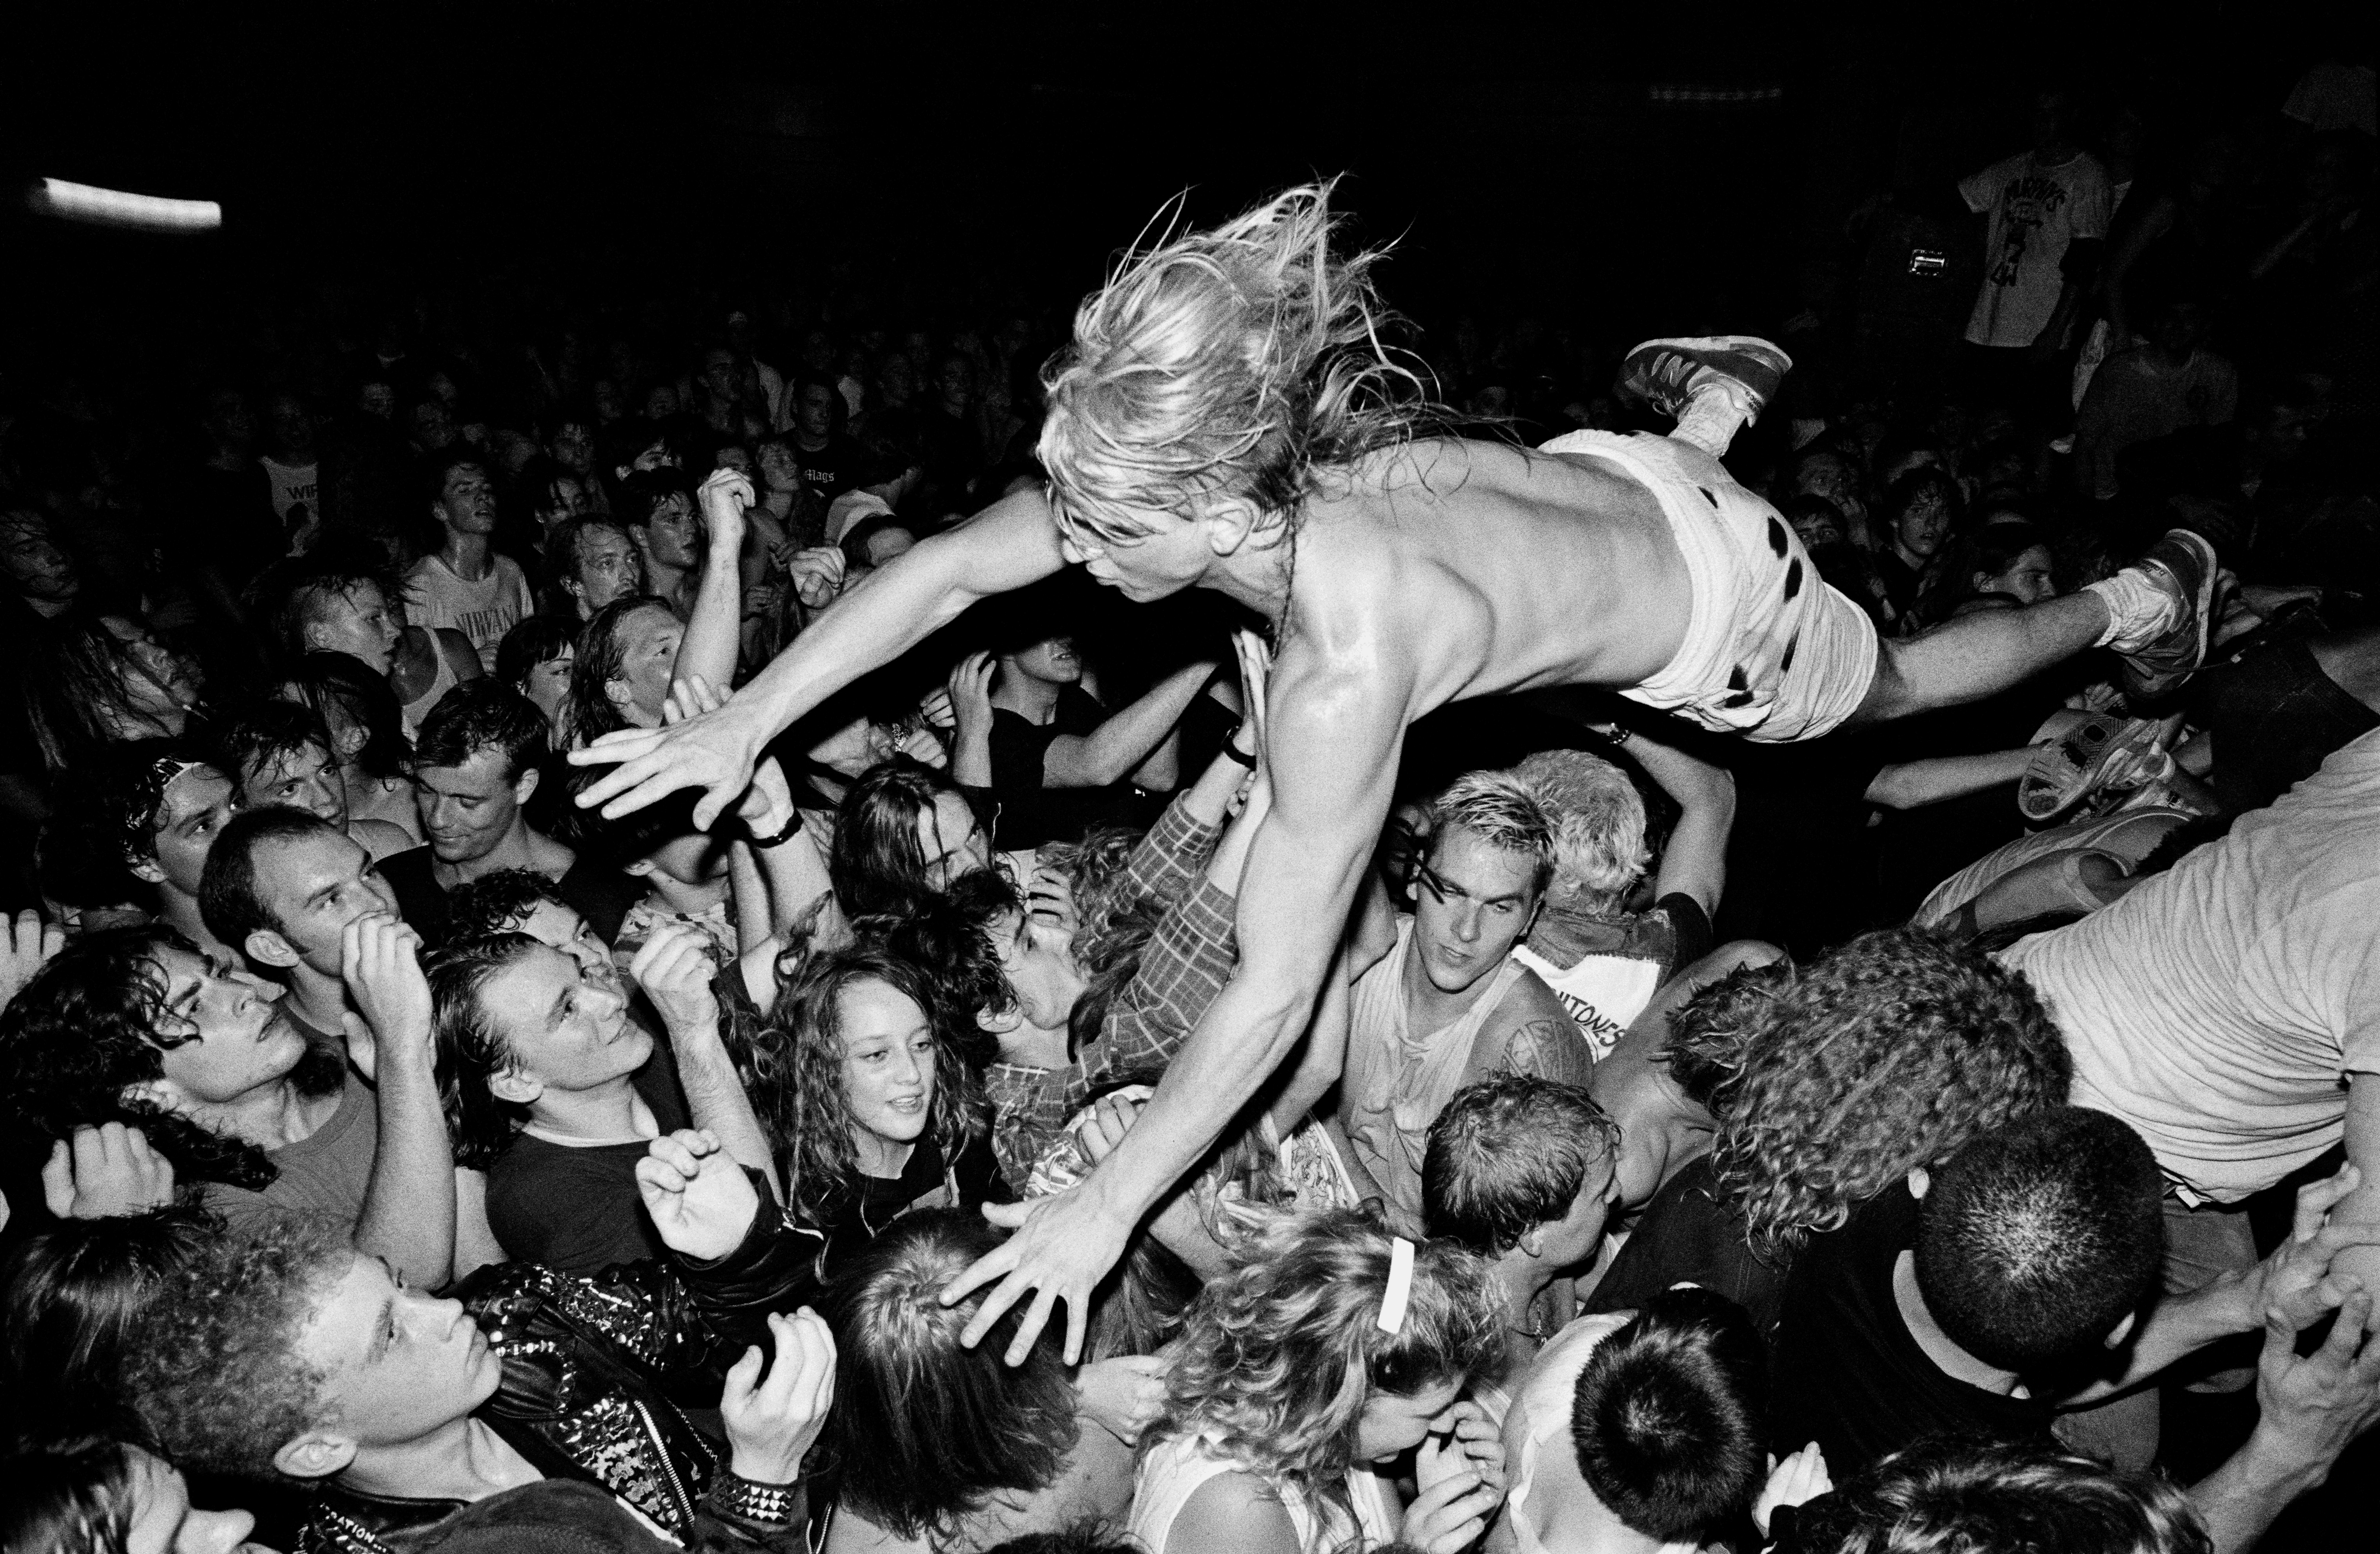 Stage diver, Nirvana, Motorsports Garage, Seattle, 1990